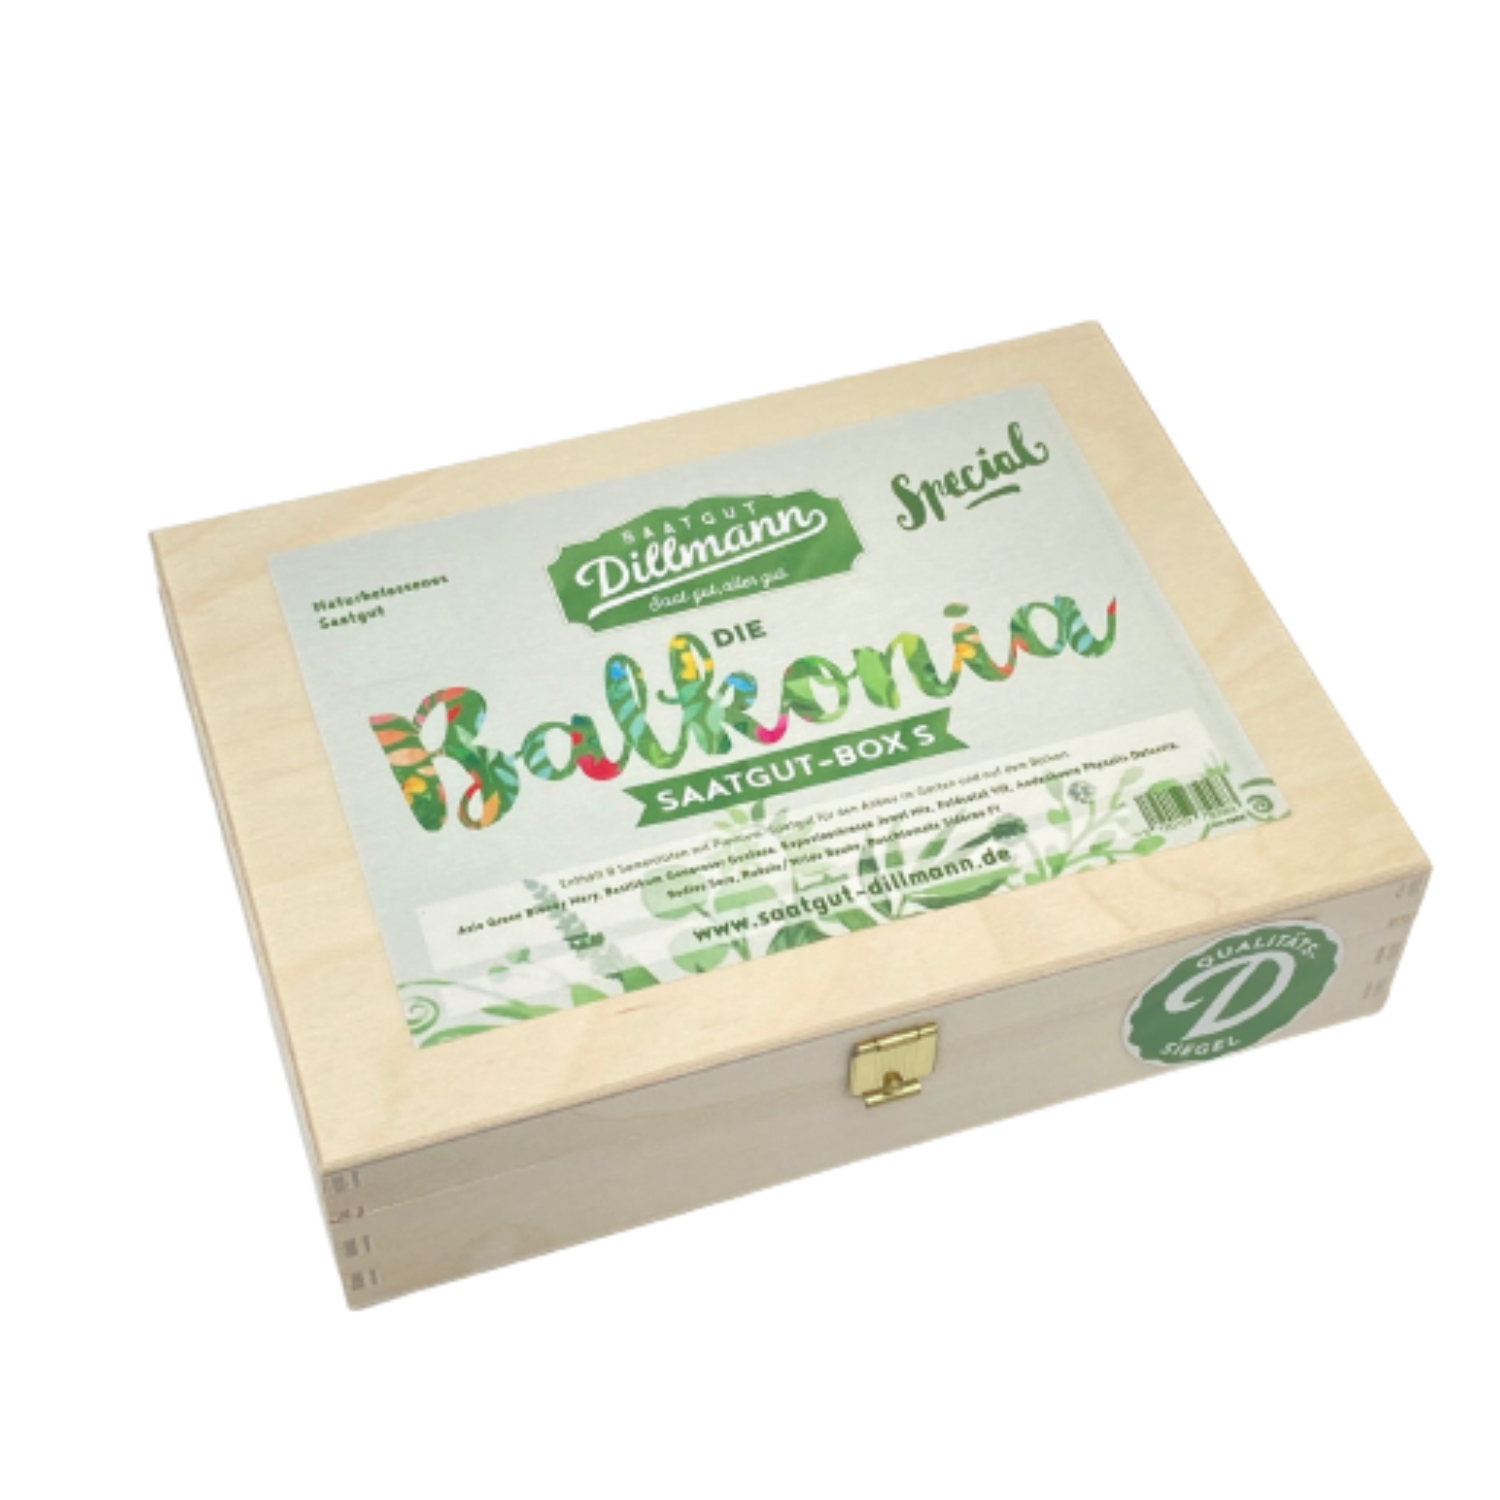 Saatgut-Box Holz: "Balkonia S" für Hobbygärtner